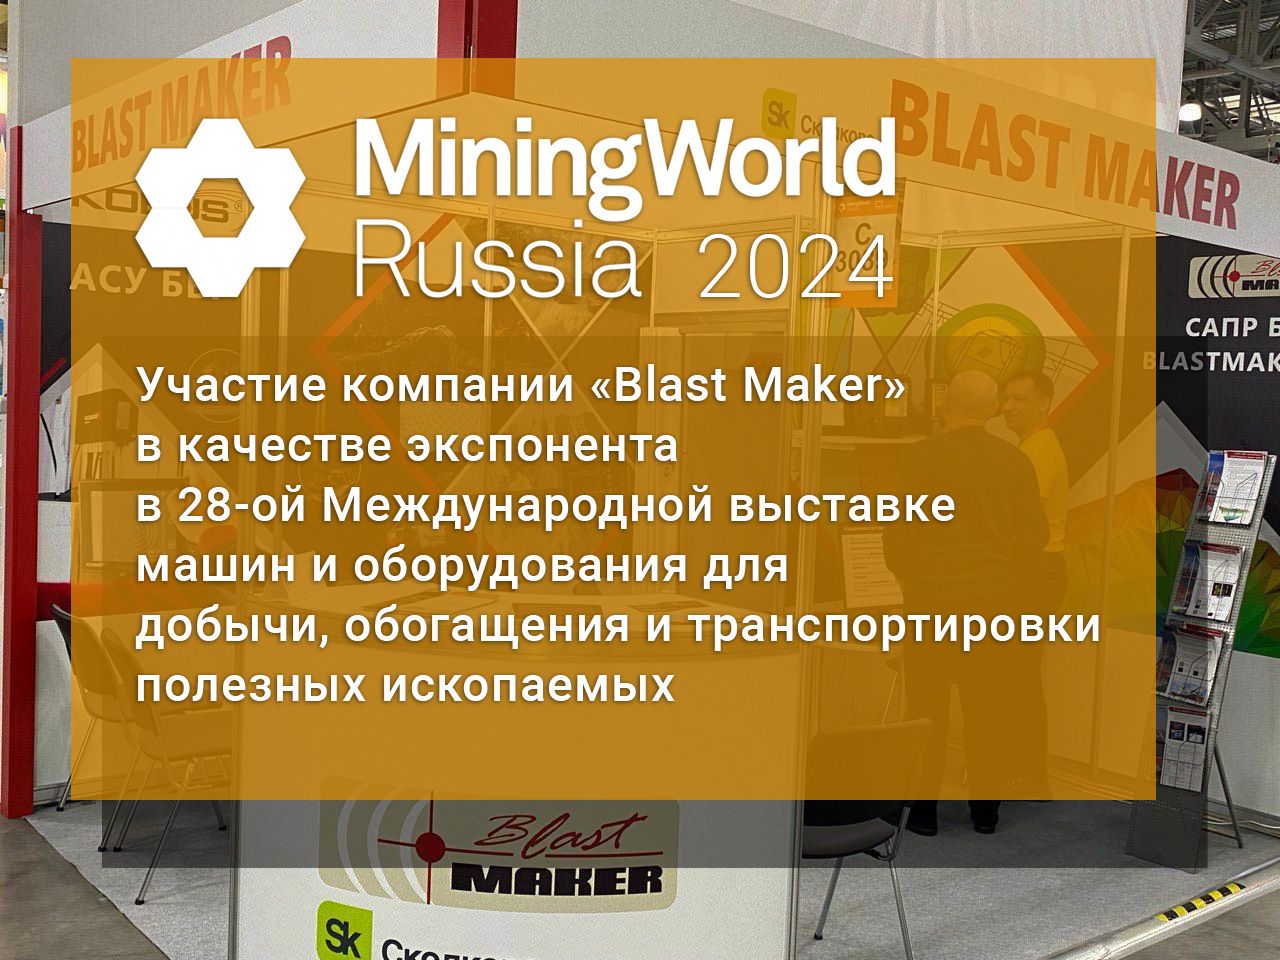 MiningWorld Russia 2024 Участие компании Blast Maker в выставке в качестве экспонента